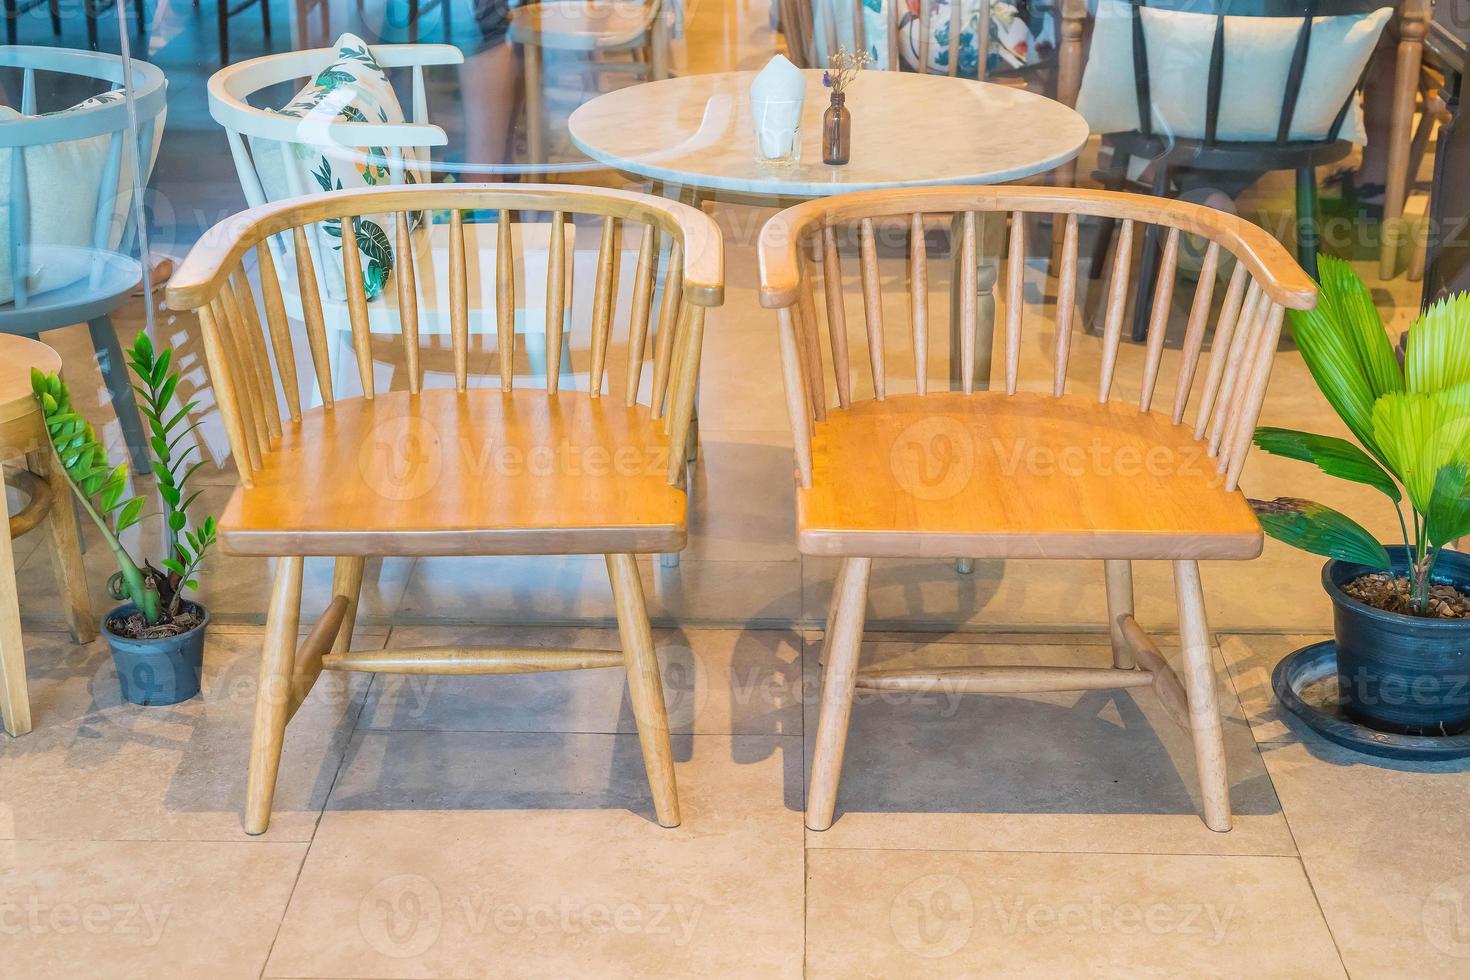 Empty wood chair in restaurant photo